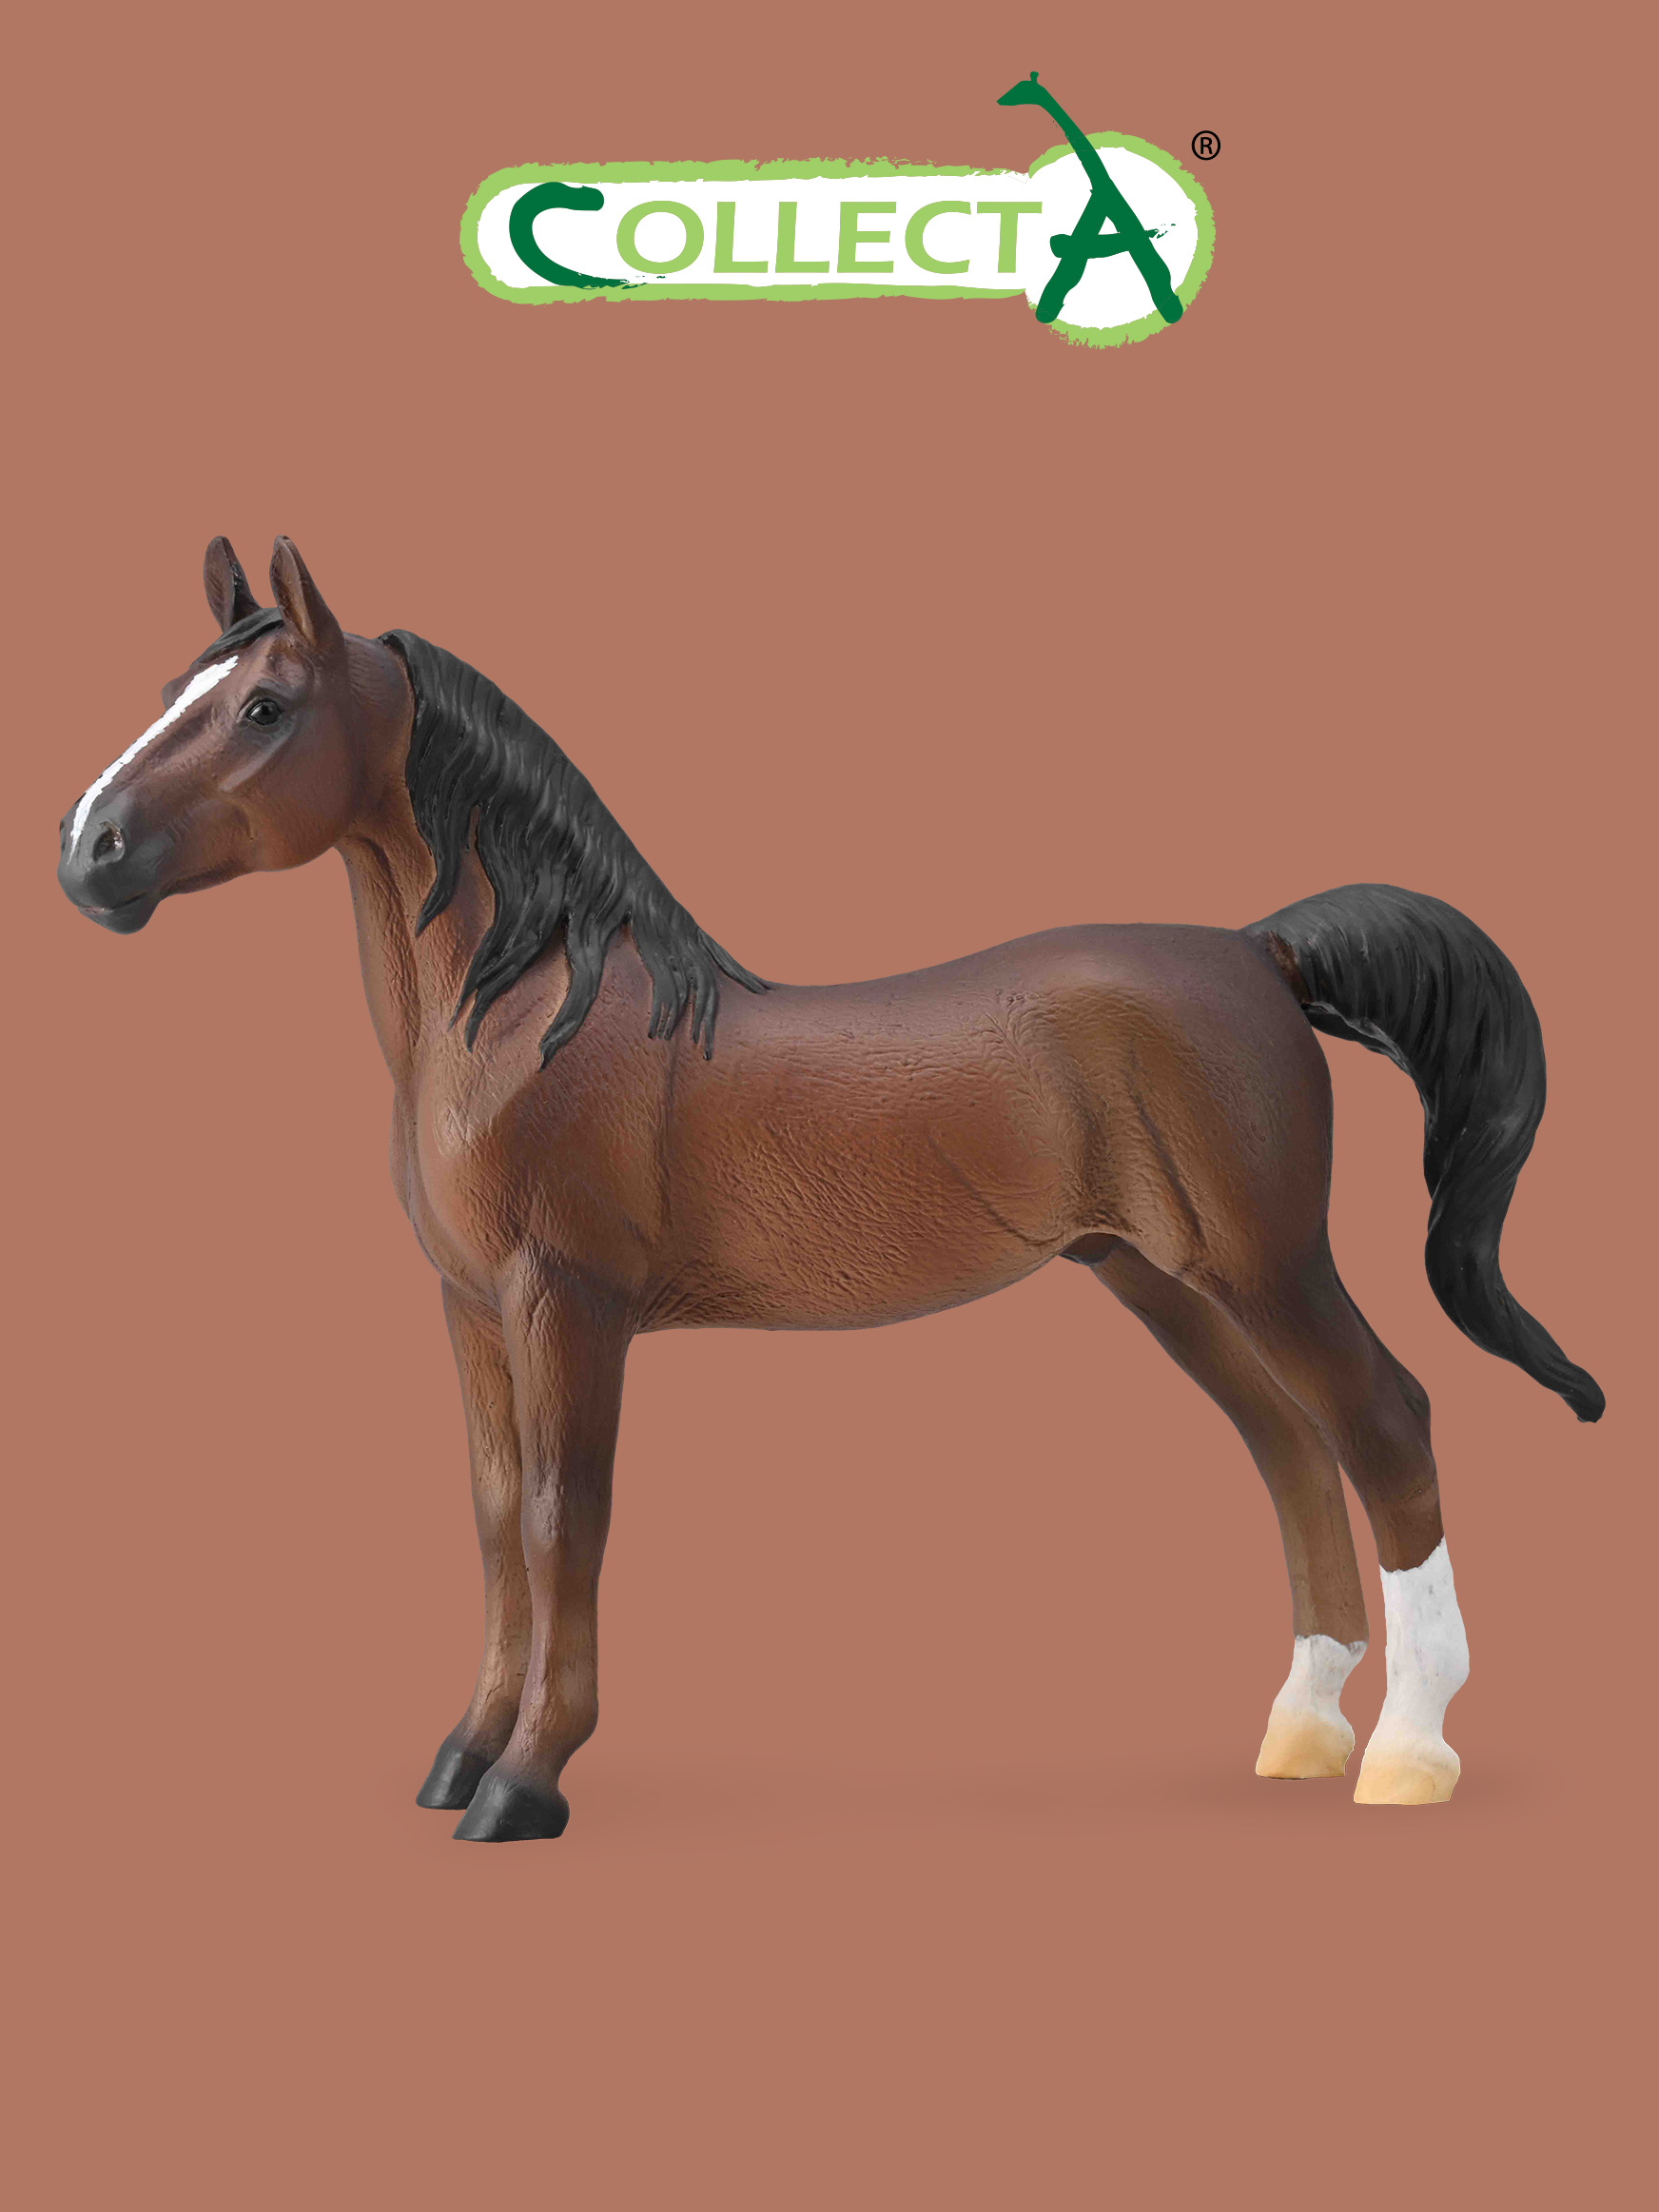 Фигурка Collecta животного Лошадь Американский шорный жеребец collecta фигурка американская кремовая лошадь xl